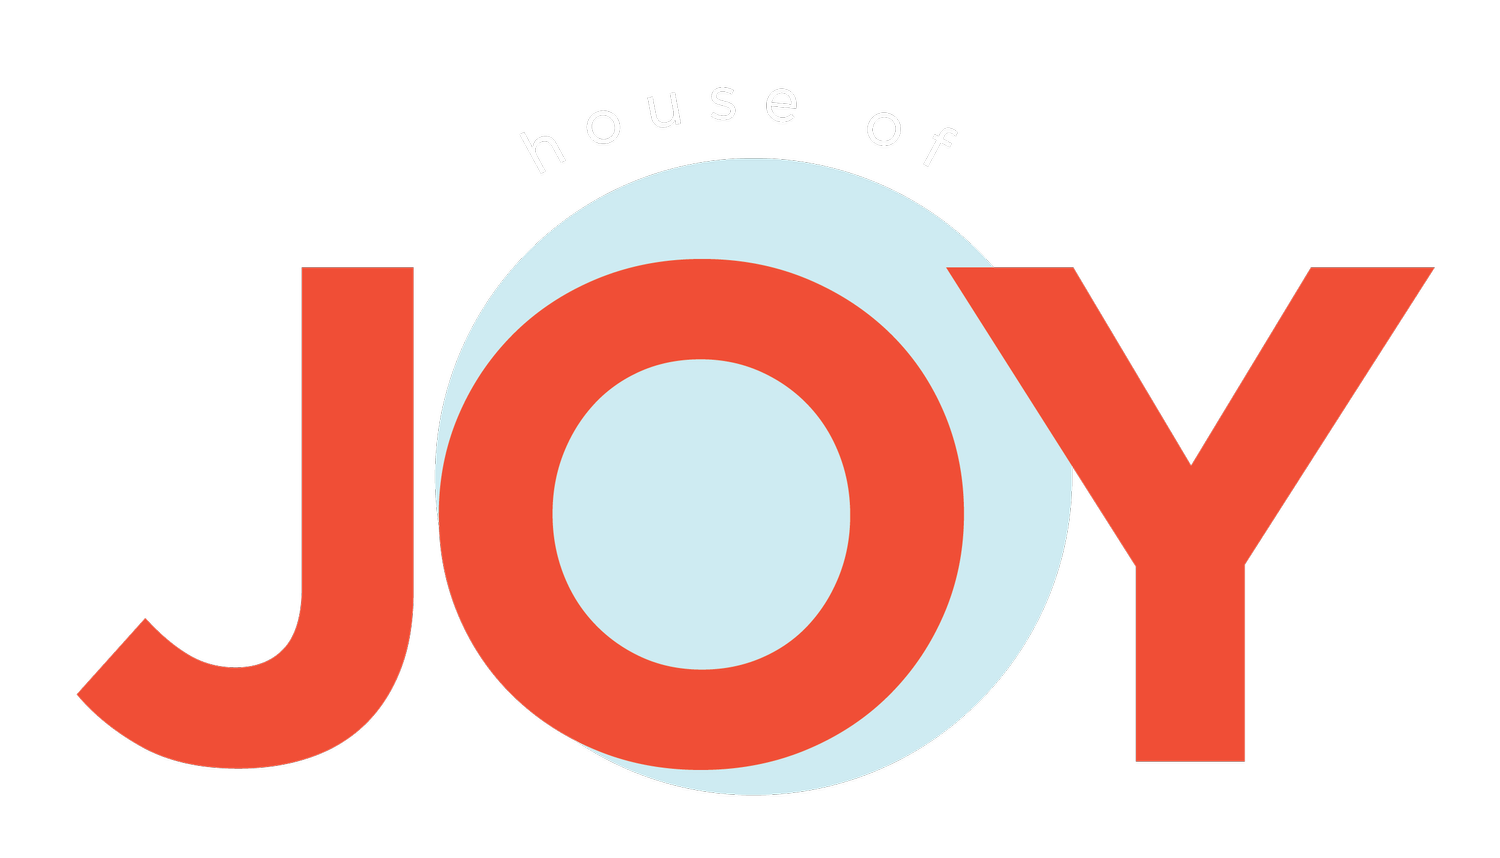 The House of JOY